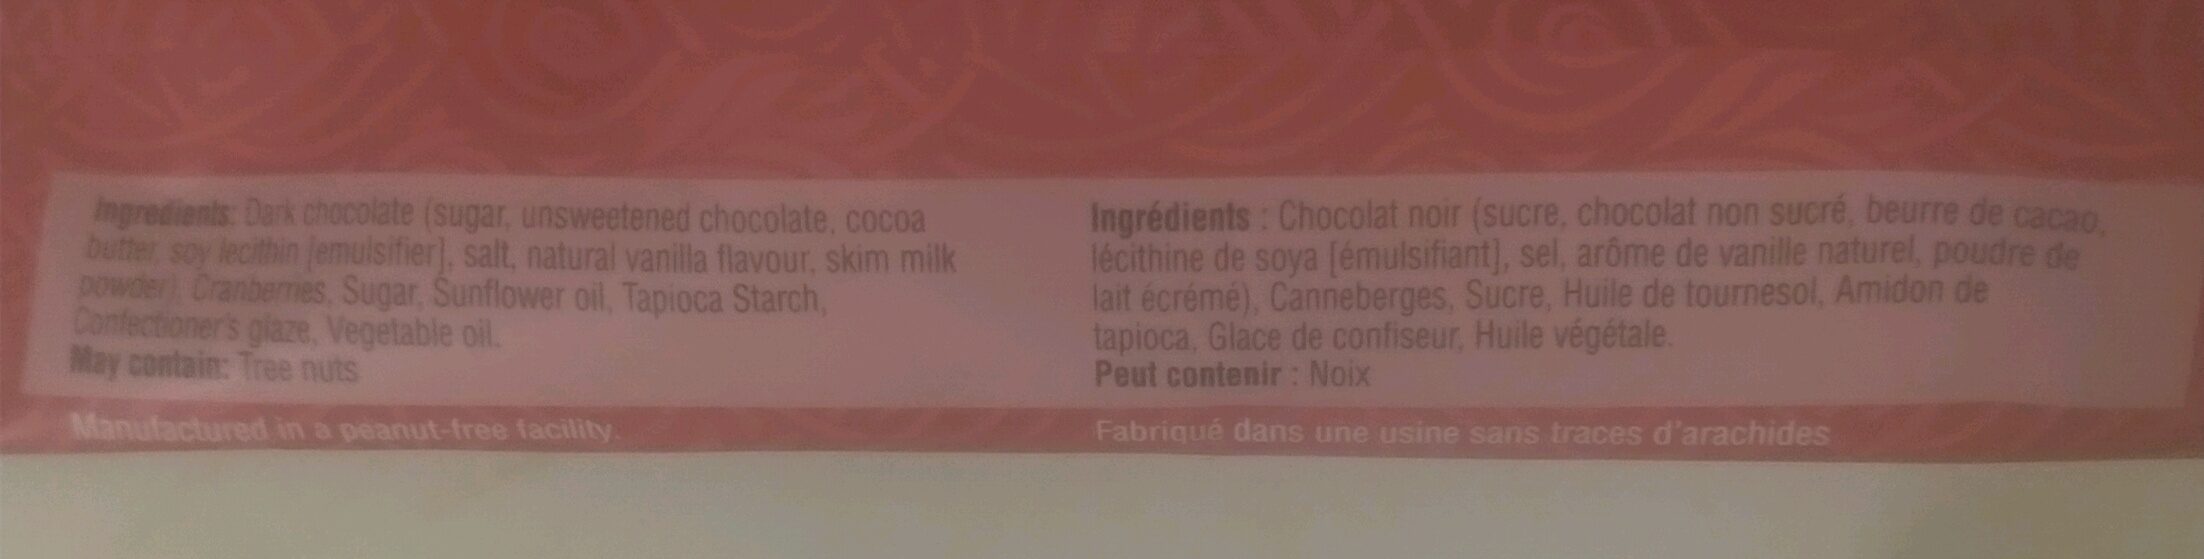 Dark Chocolate Cranberries - Ingrédients